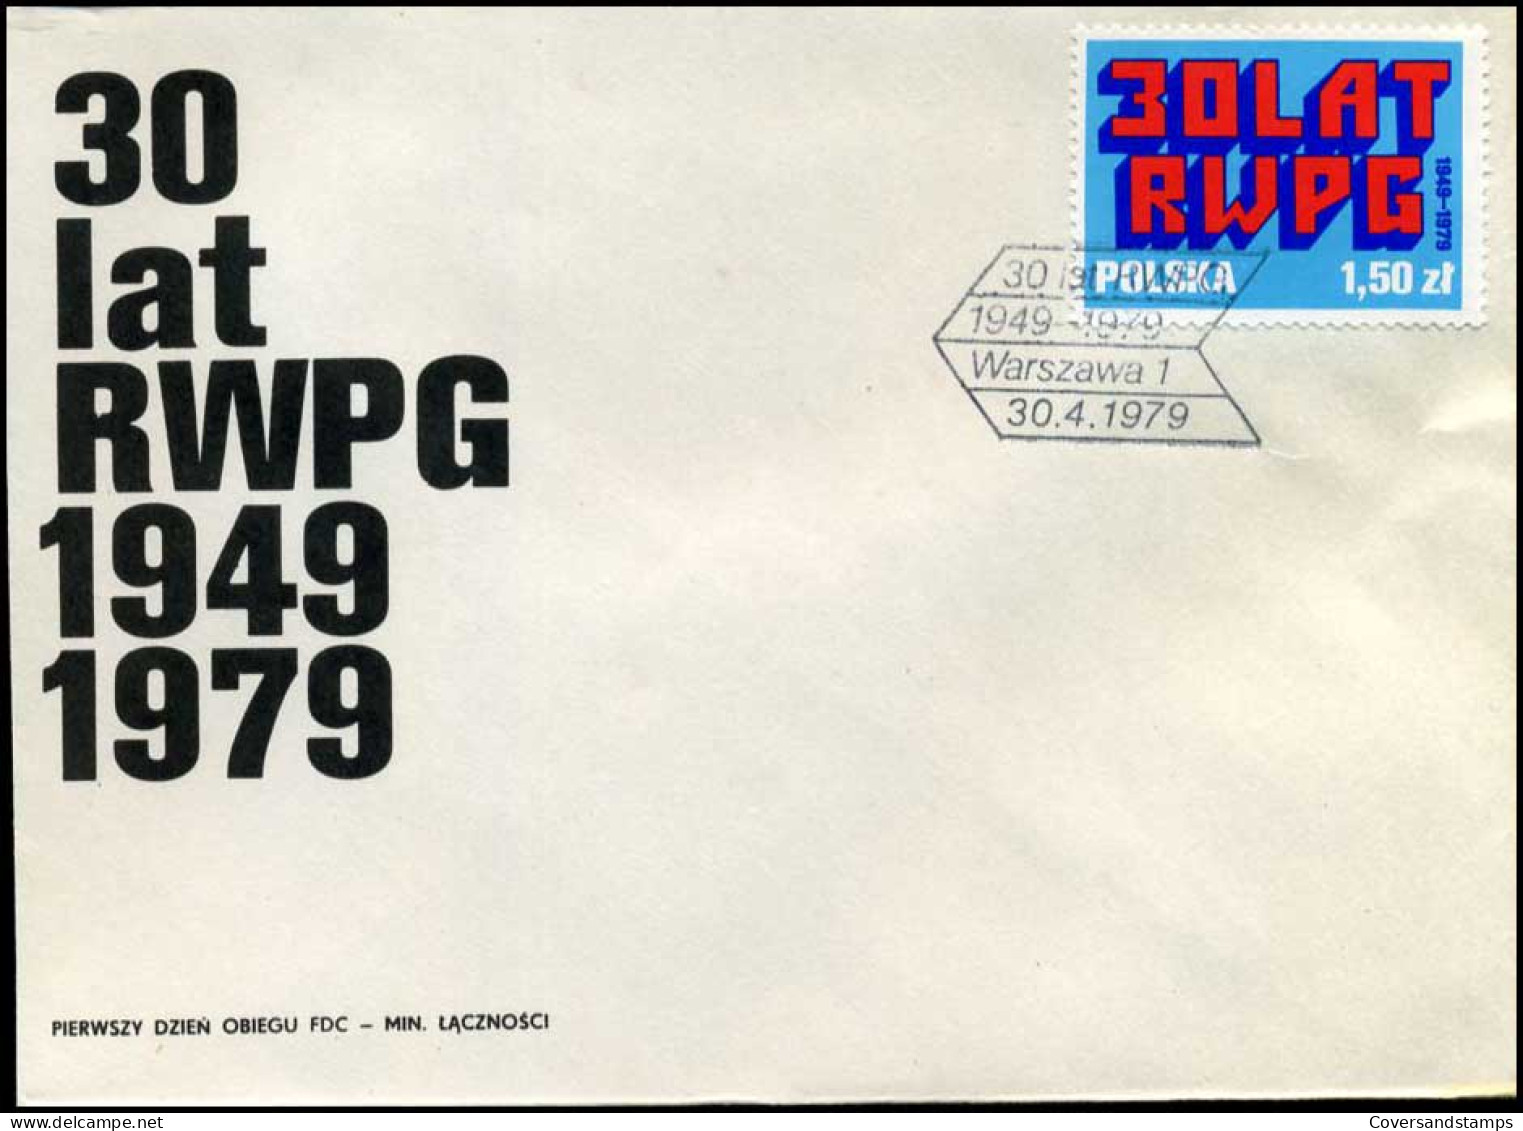 Polen - FDC -  30 Lat RWPG 1949-1979 - FDC